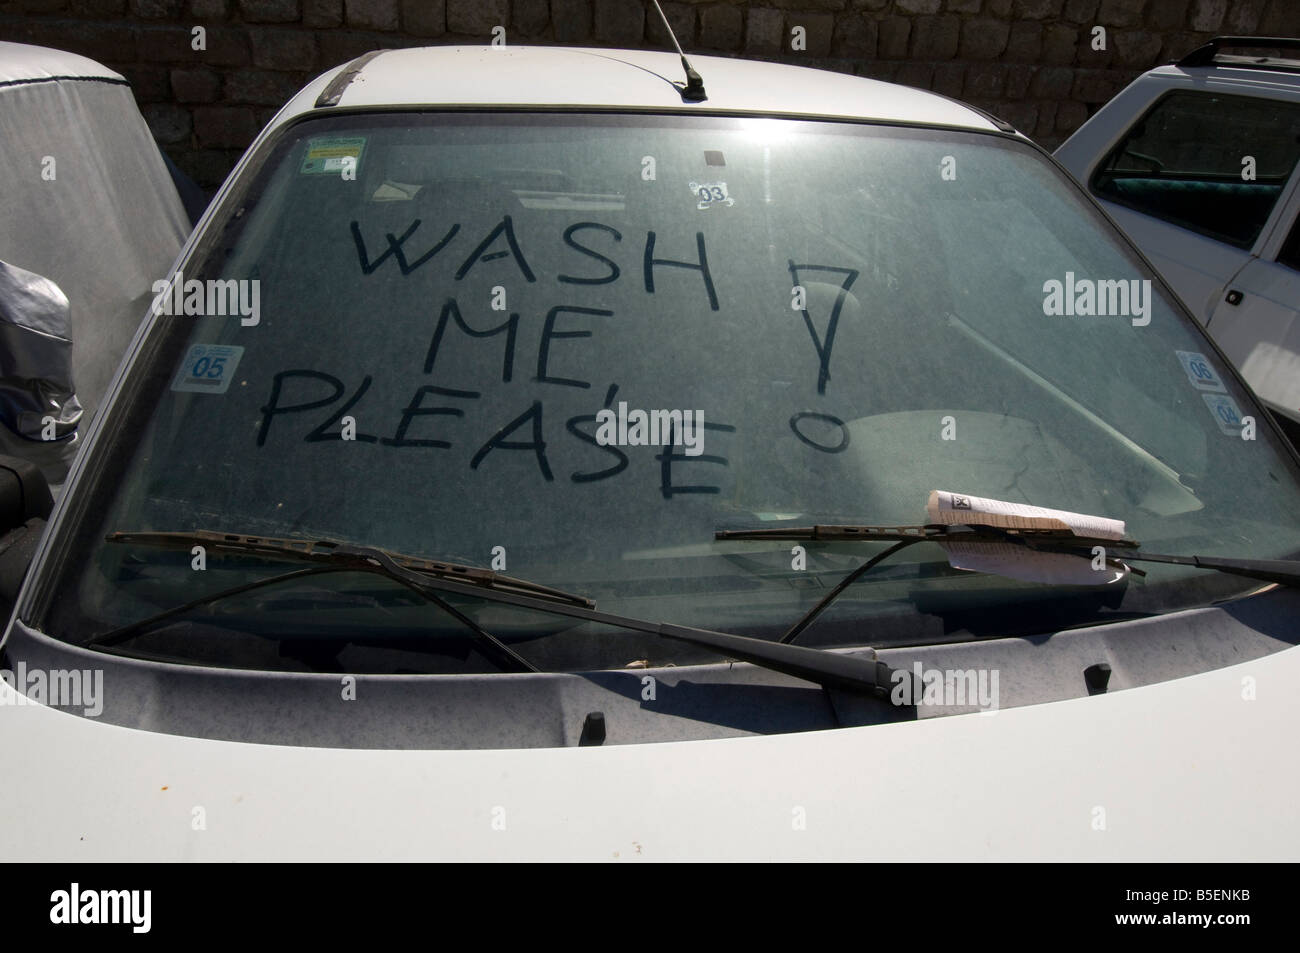 A Wash Me Please inscription plea written on the filthy windowscreen of a dirty car Stock Photo